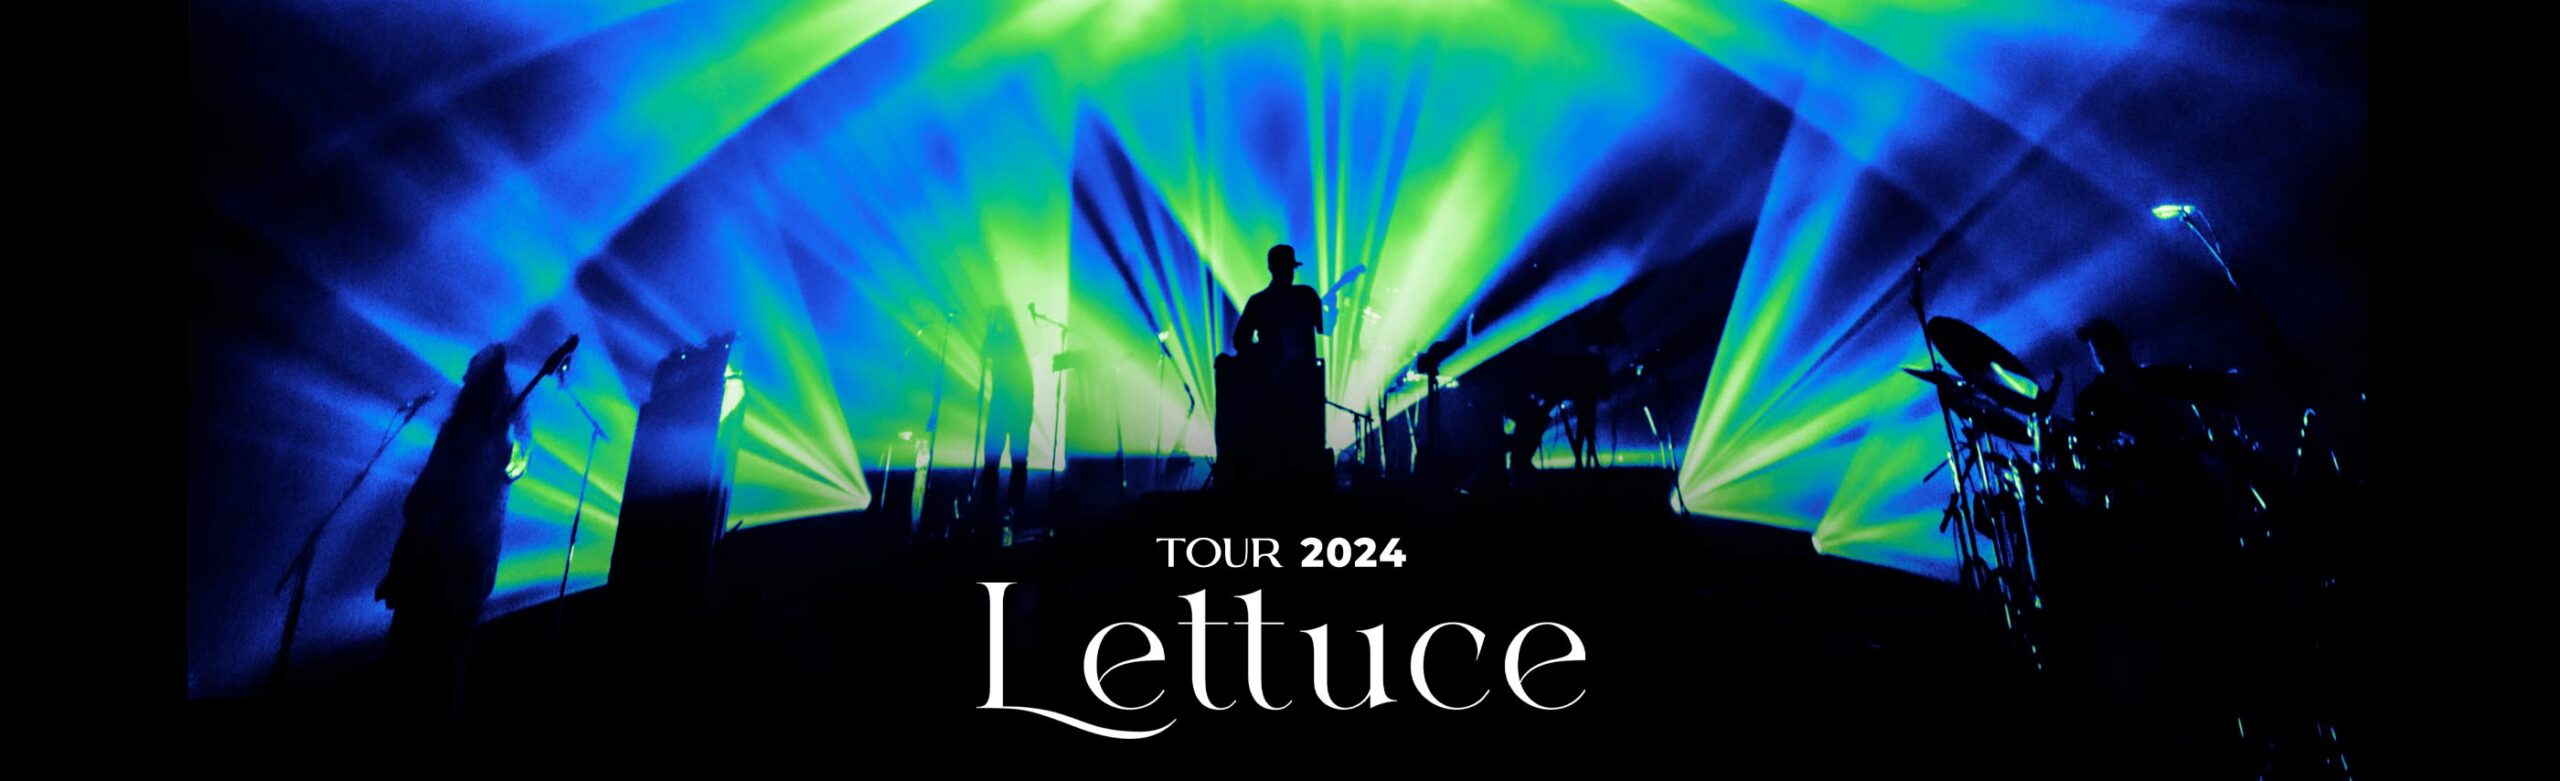 Lettuce Announces Concert at The ELM in Bozeman Image